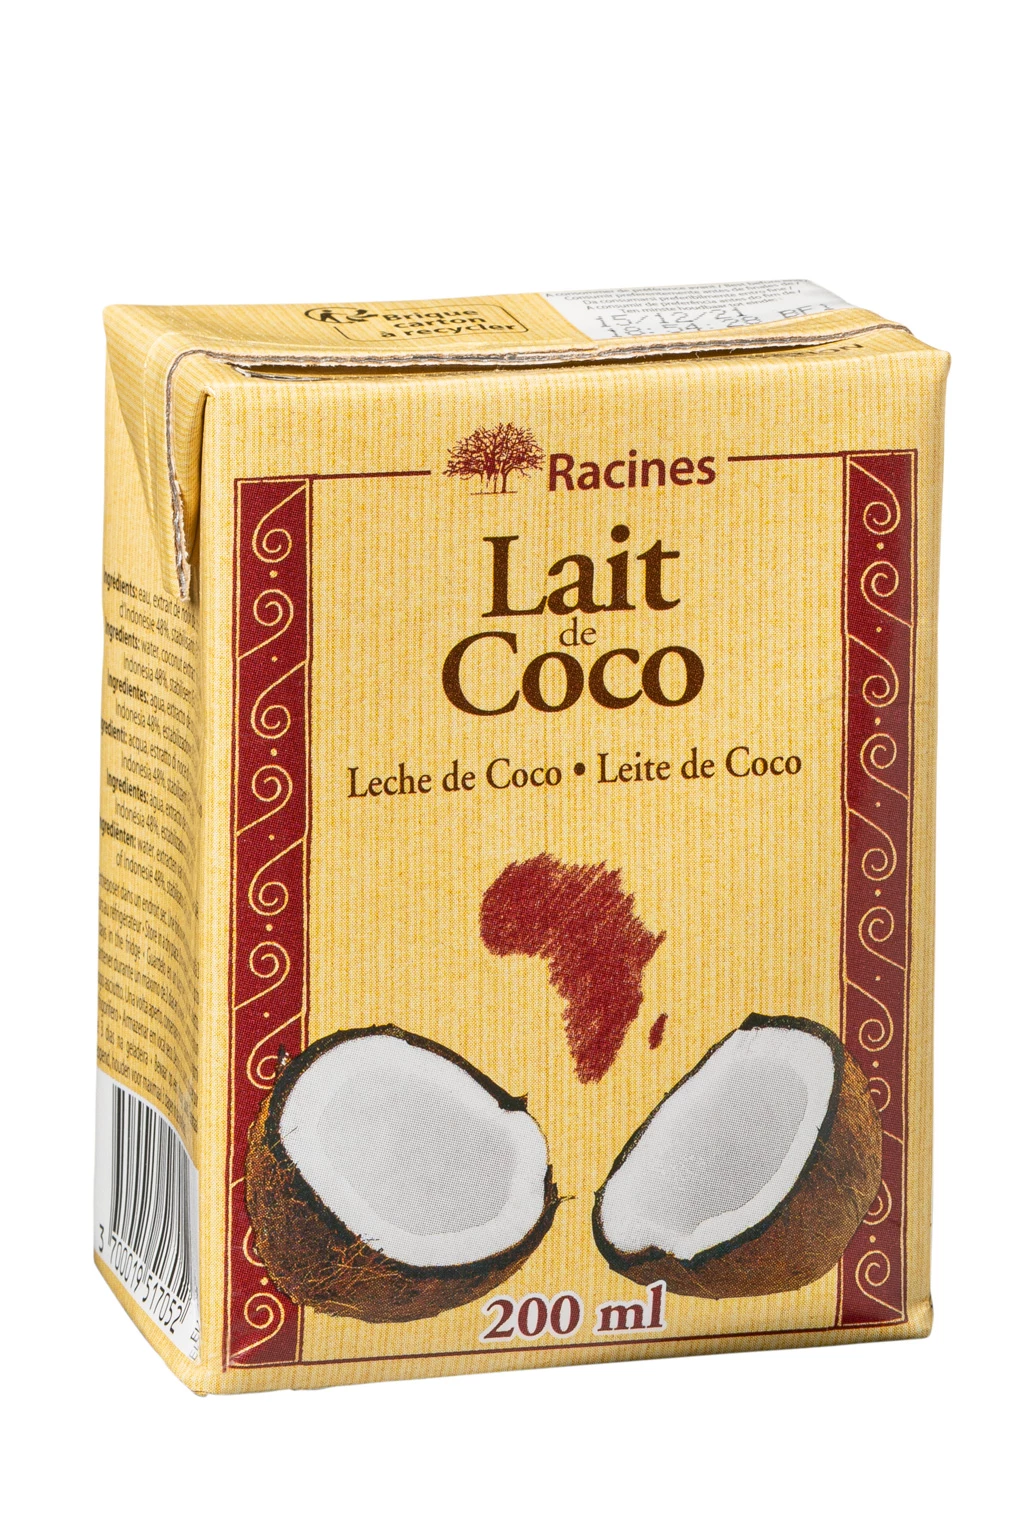 Leite de Coco (24 X 200 Ml) Tetrapack - Racines